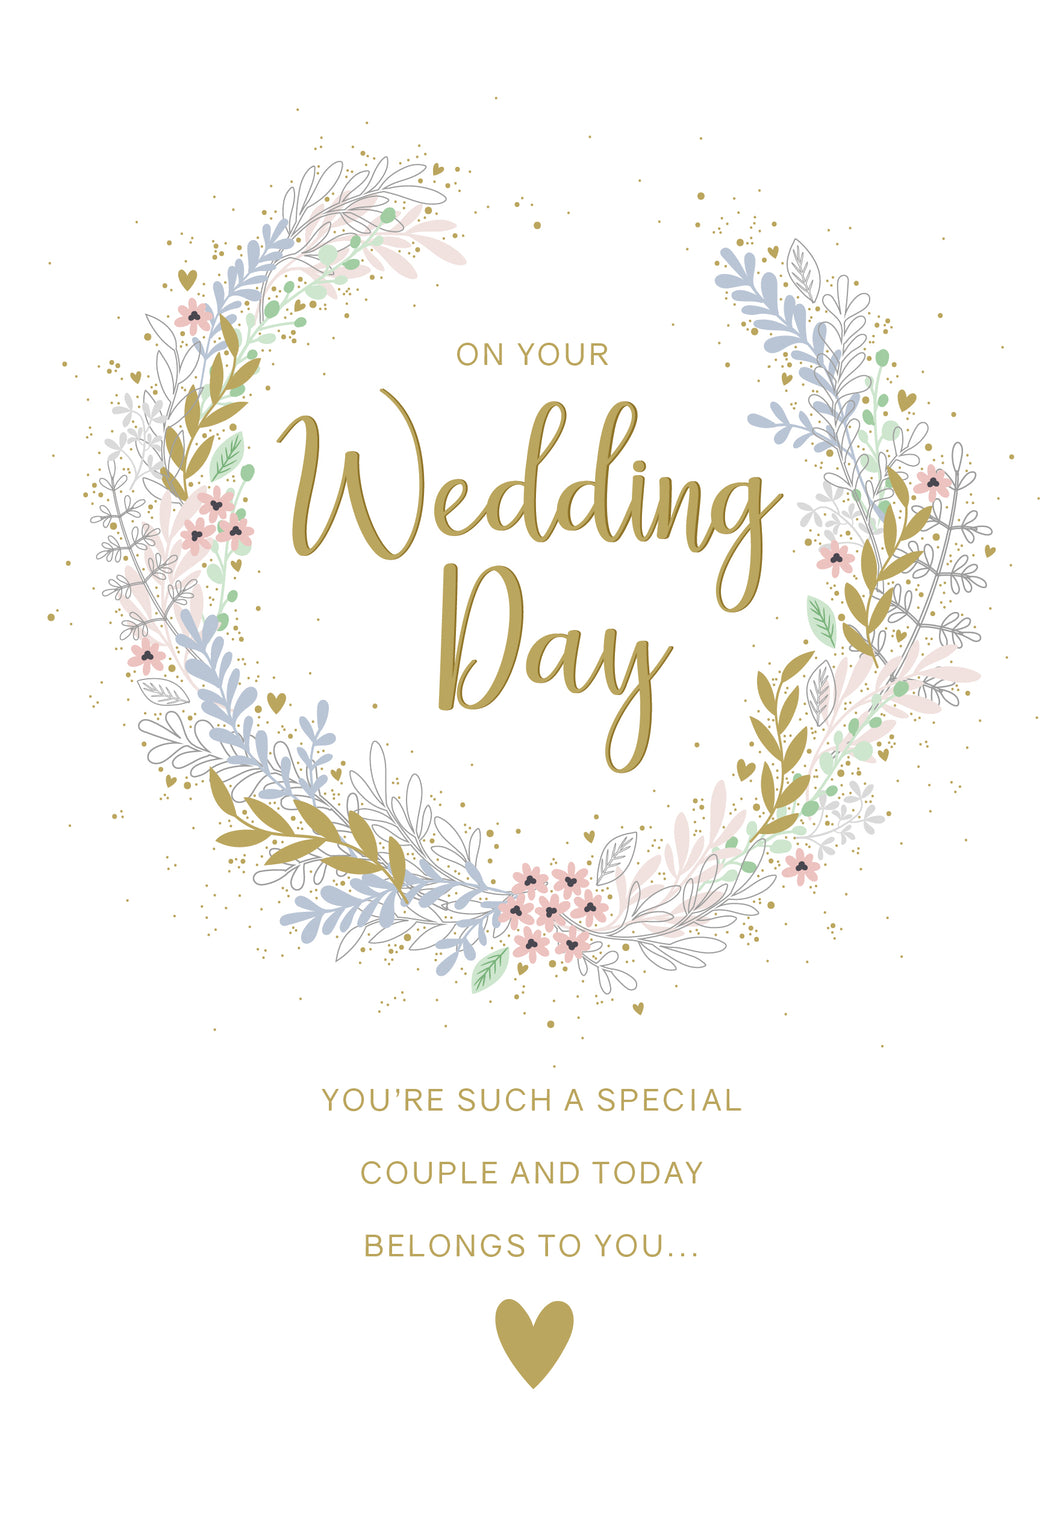 On Your Wedding Day - Wedding Day Card